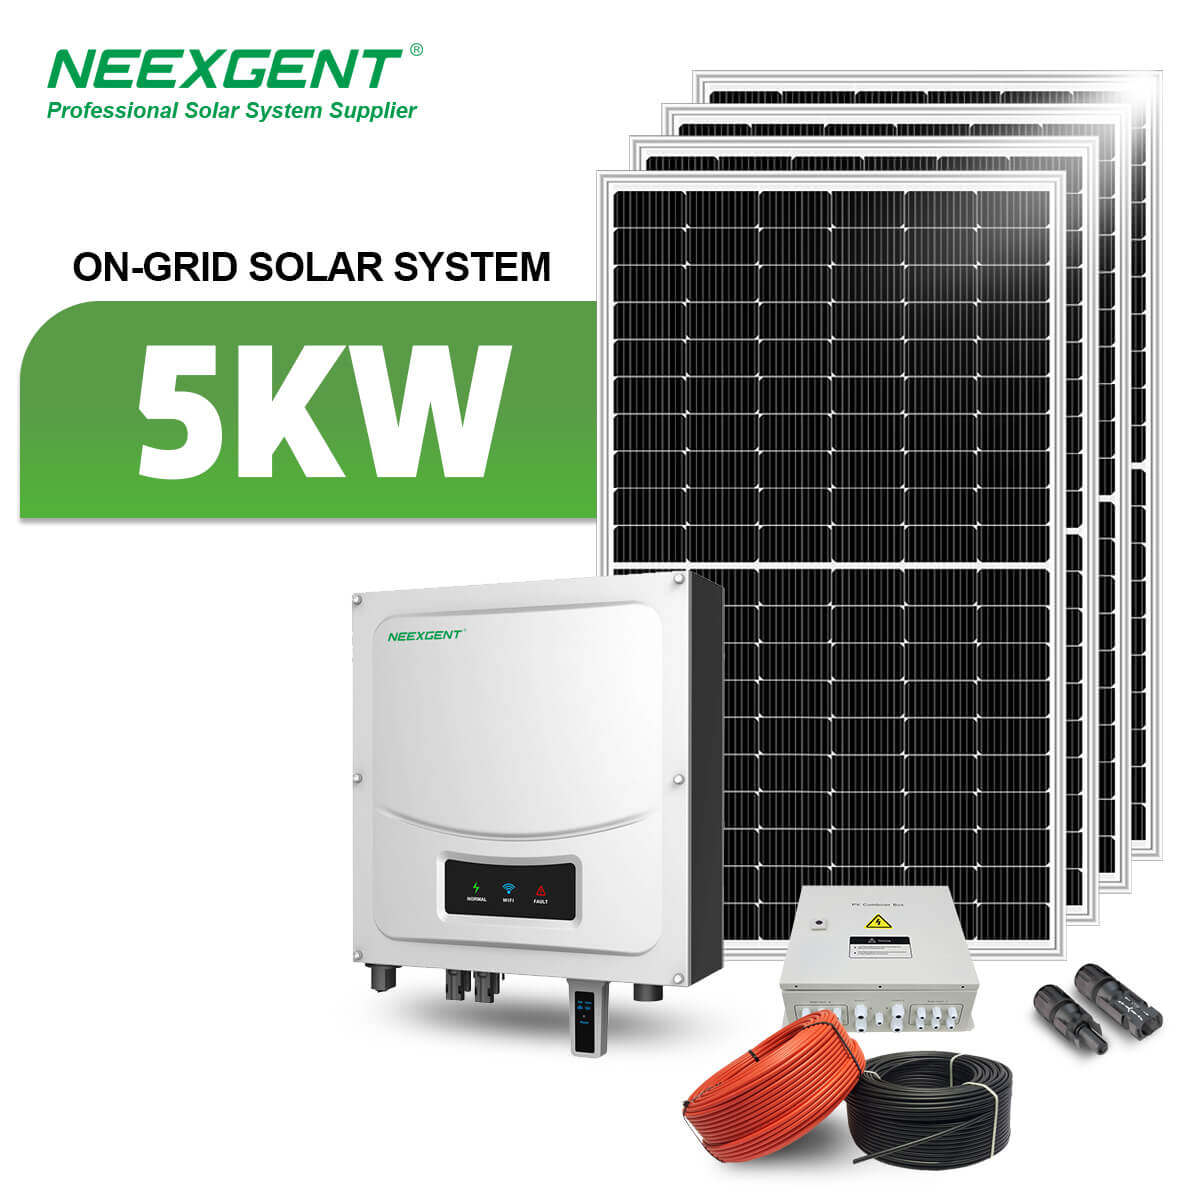 Neexgent On-grid Solar System Hybrid Solar System On Grid 5kw Solar System